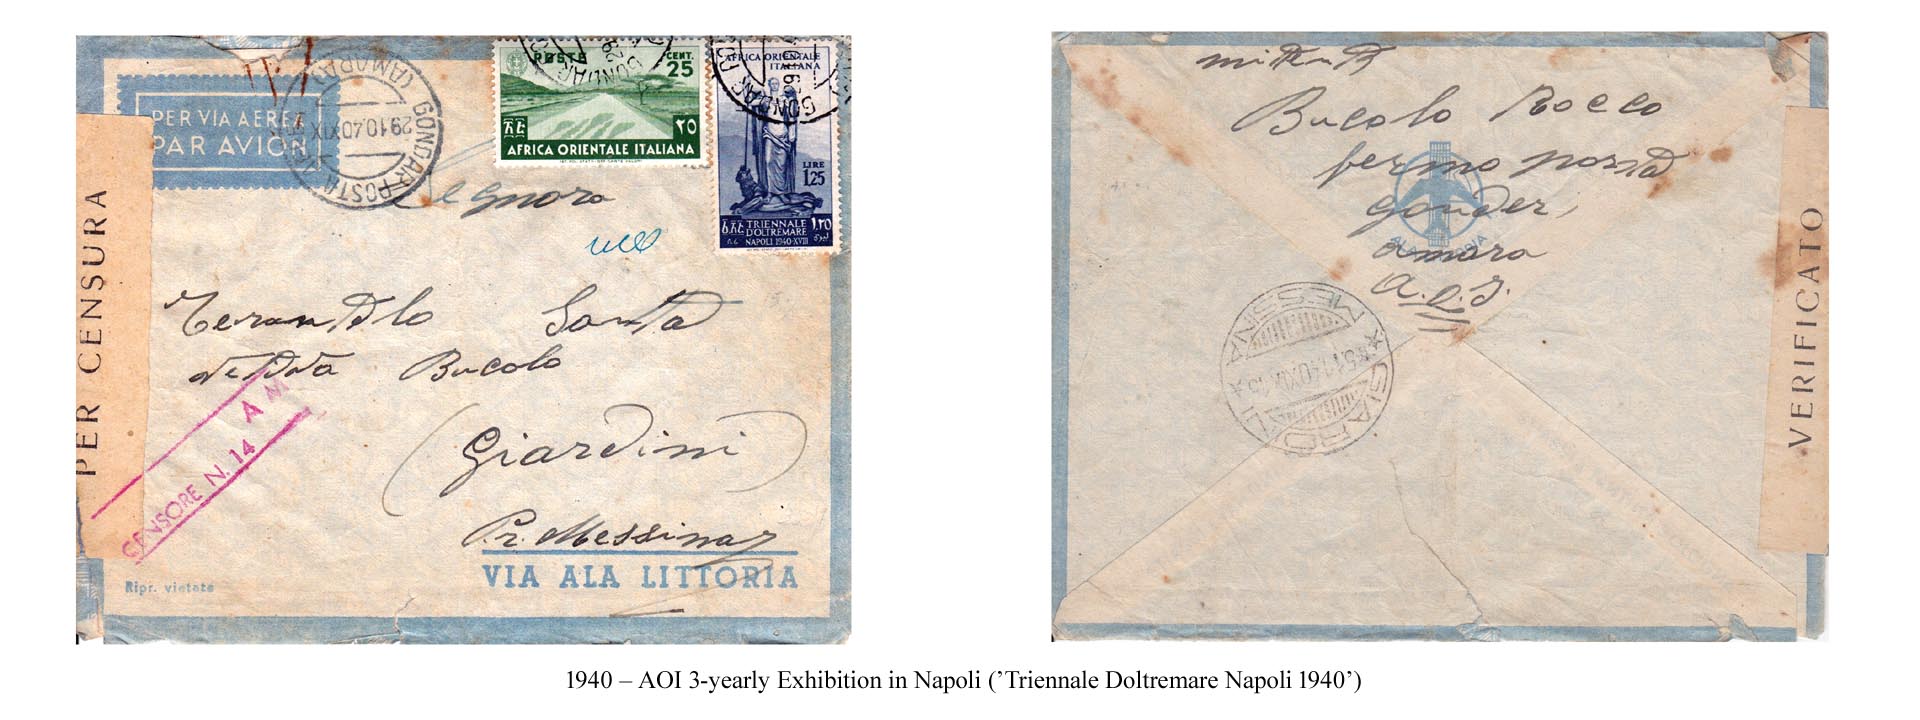 1940 – AOI 3-yearly Exhibition in Napoli (Triennale Doltremare Napoli 1940) 2